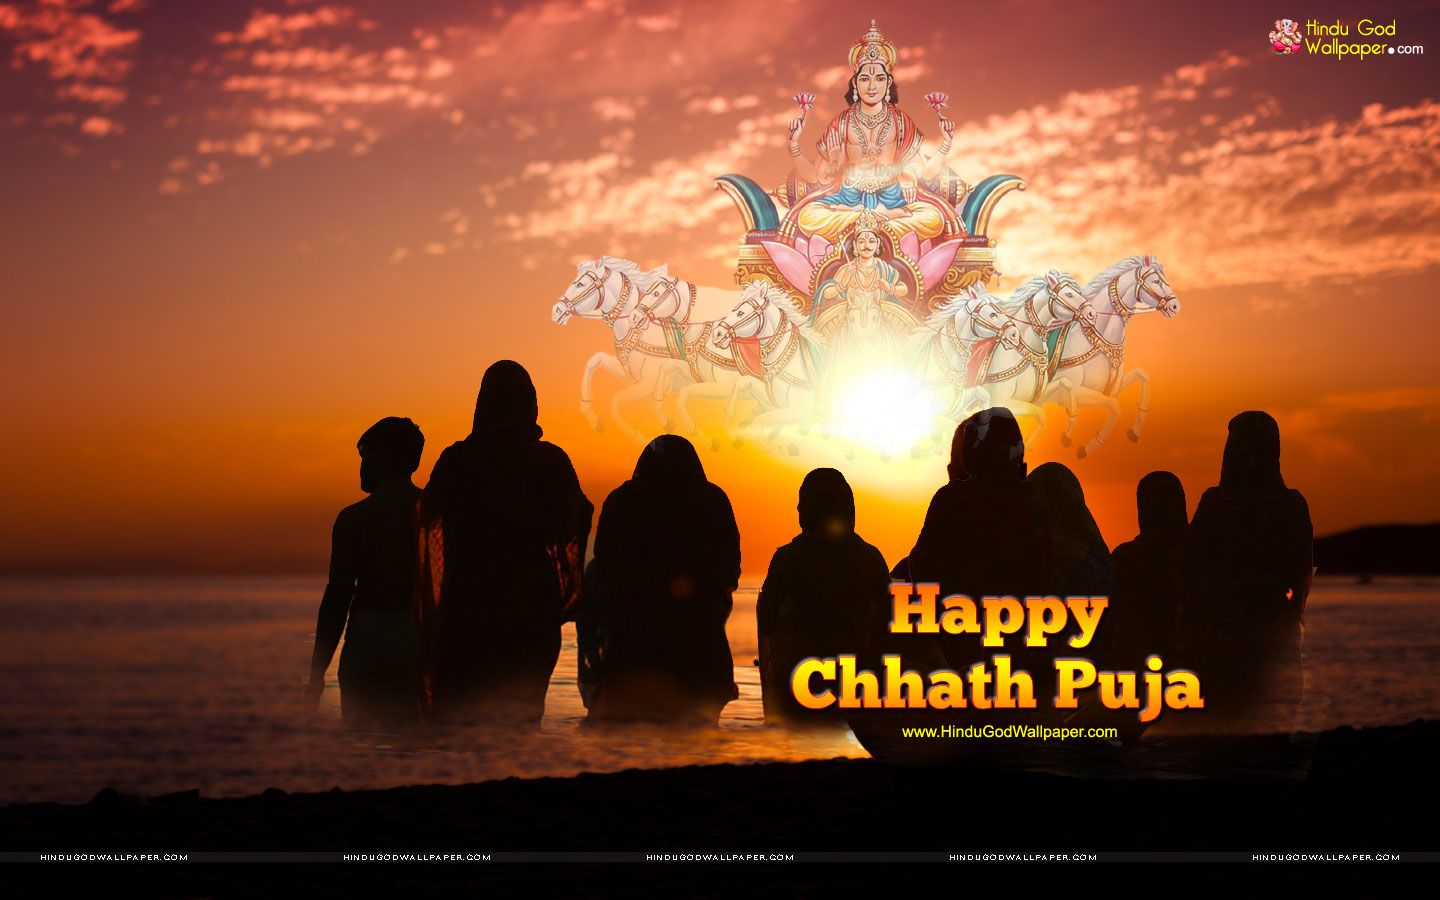 Chhath Puja Images Hd - 1440x900 Wallpaper 